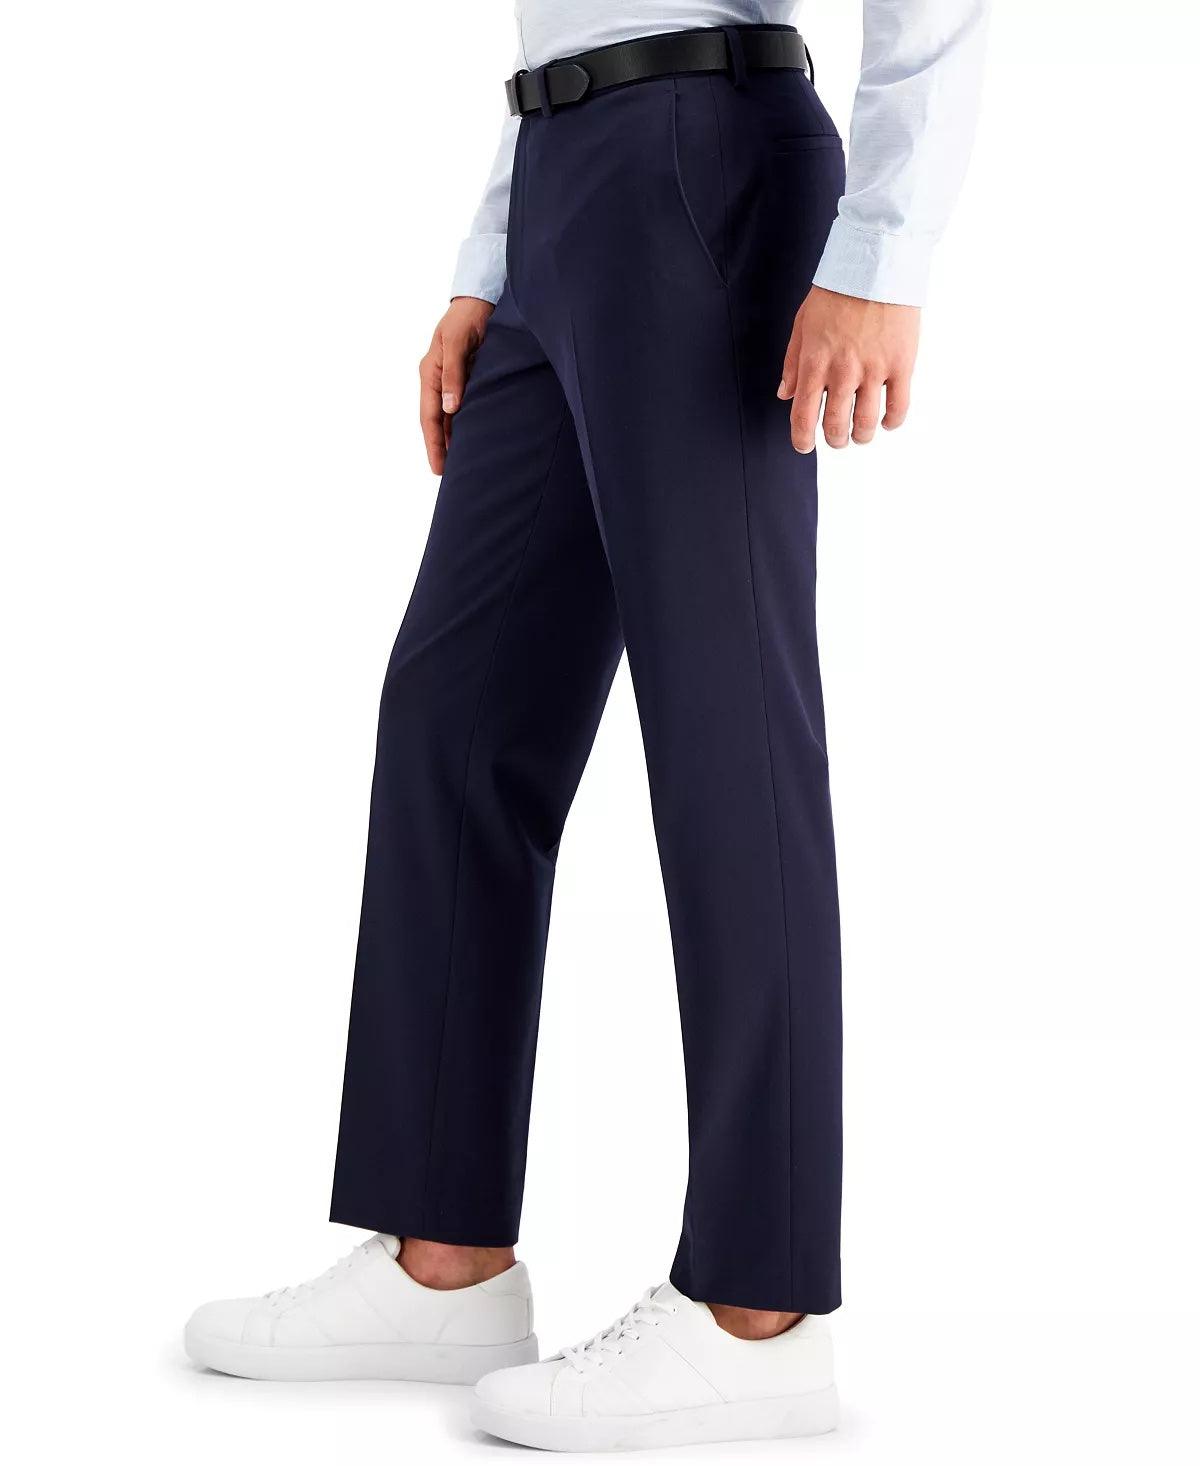 International Concepts Men's Slim-Fit Navy Solid Dress Pants 38 x 32 - Bristol Apparel Co